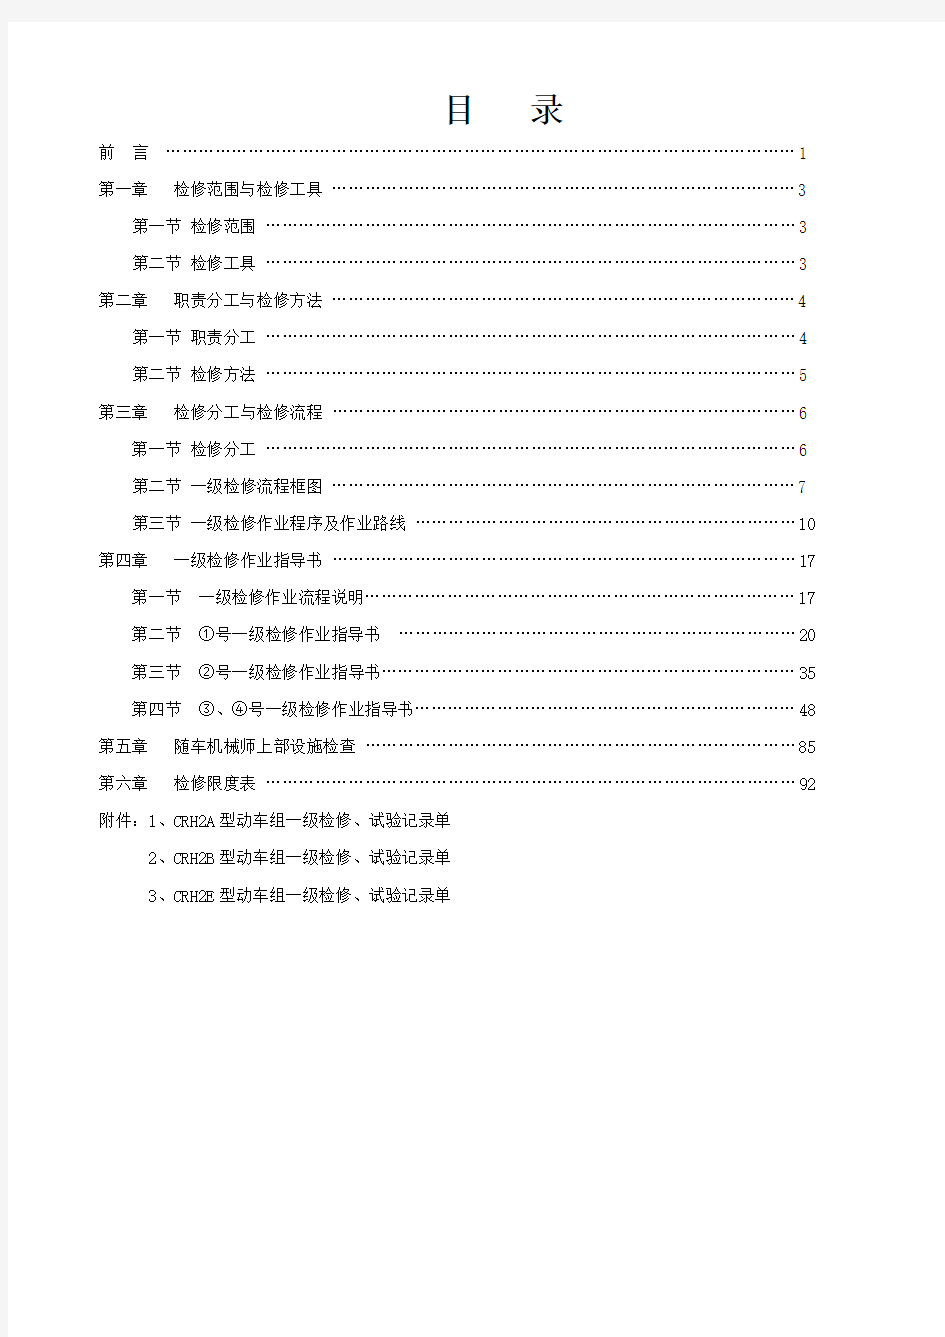 CRH型动车组一级检修作业指导书(终稿)